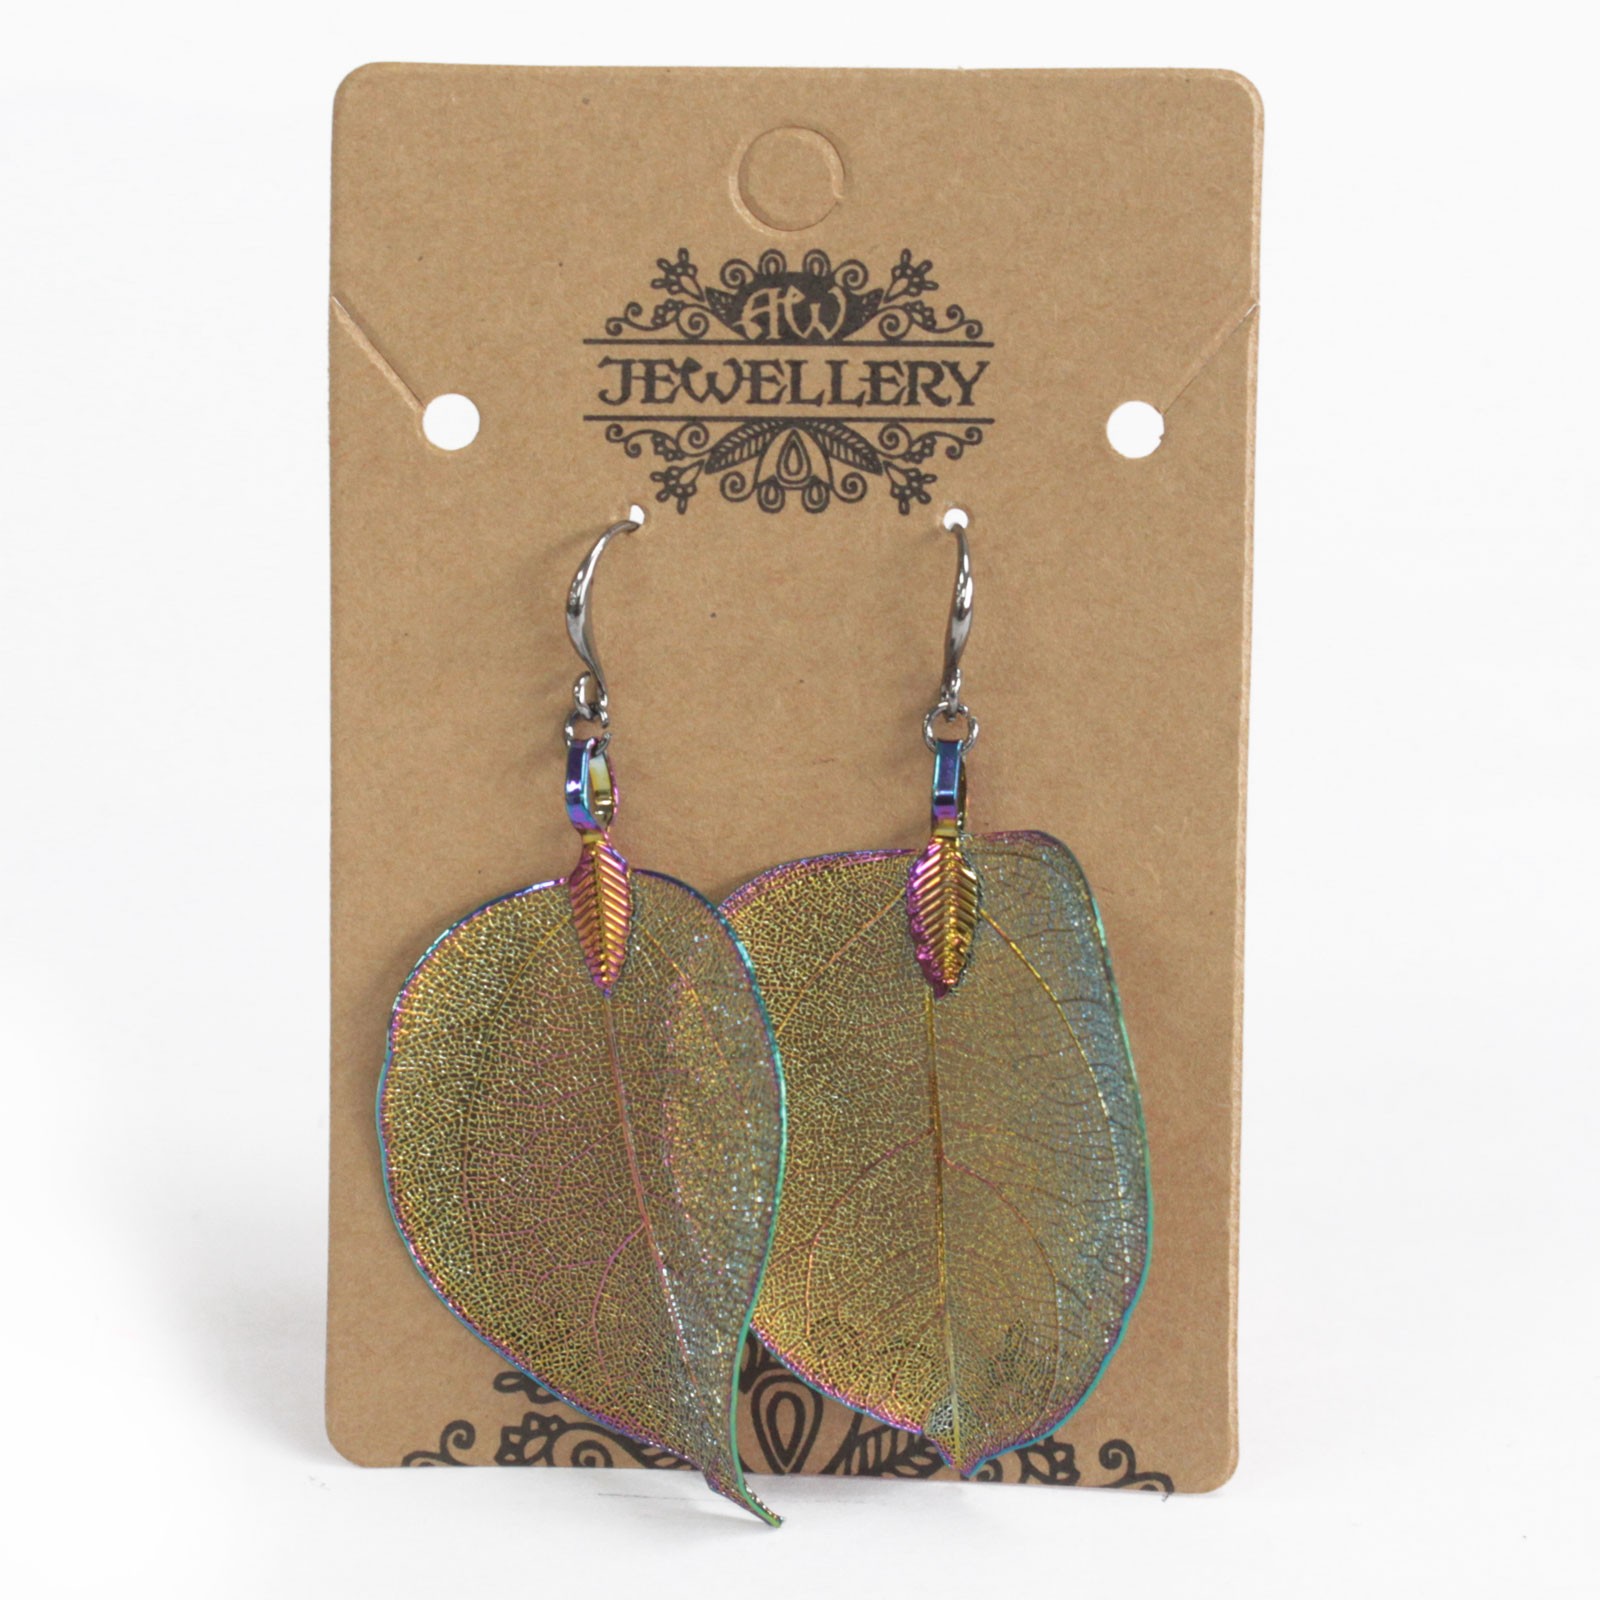 Earrings - Bravery Leaf - Multicoloured